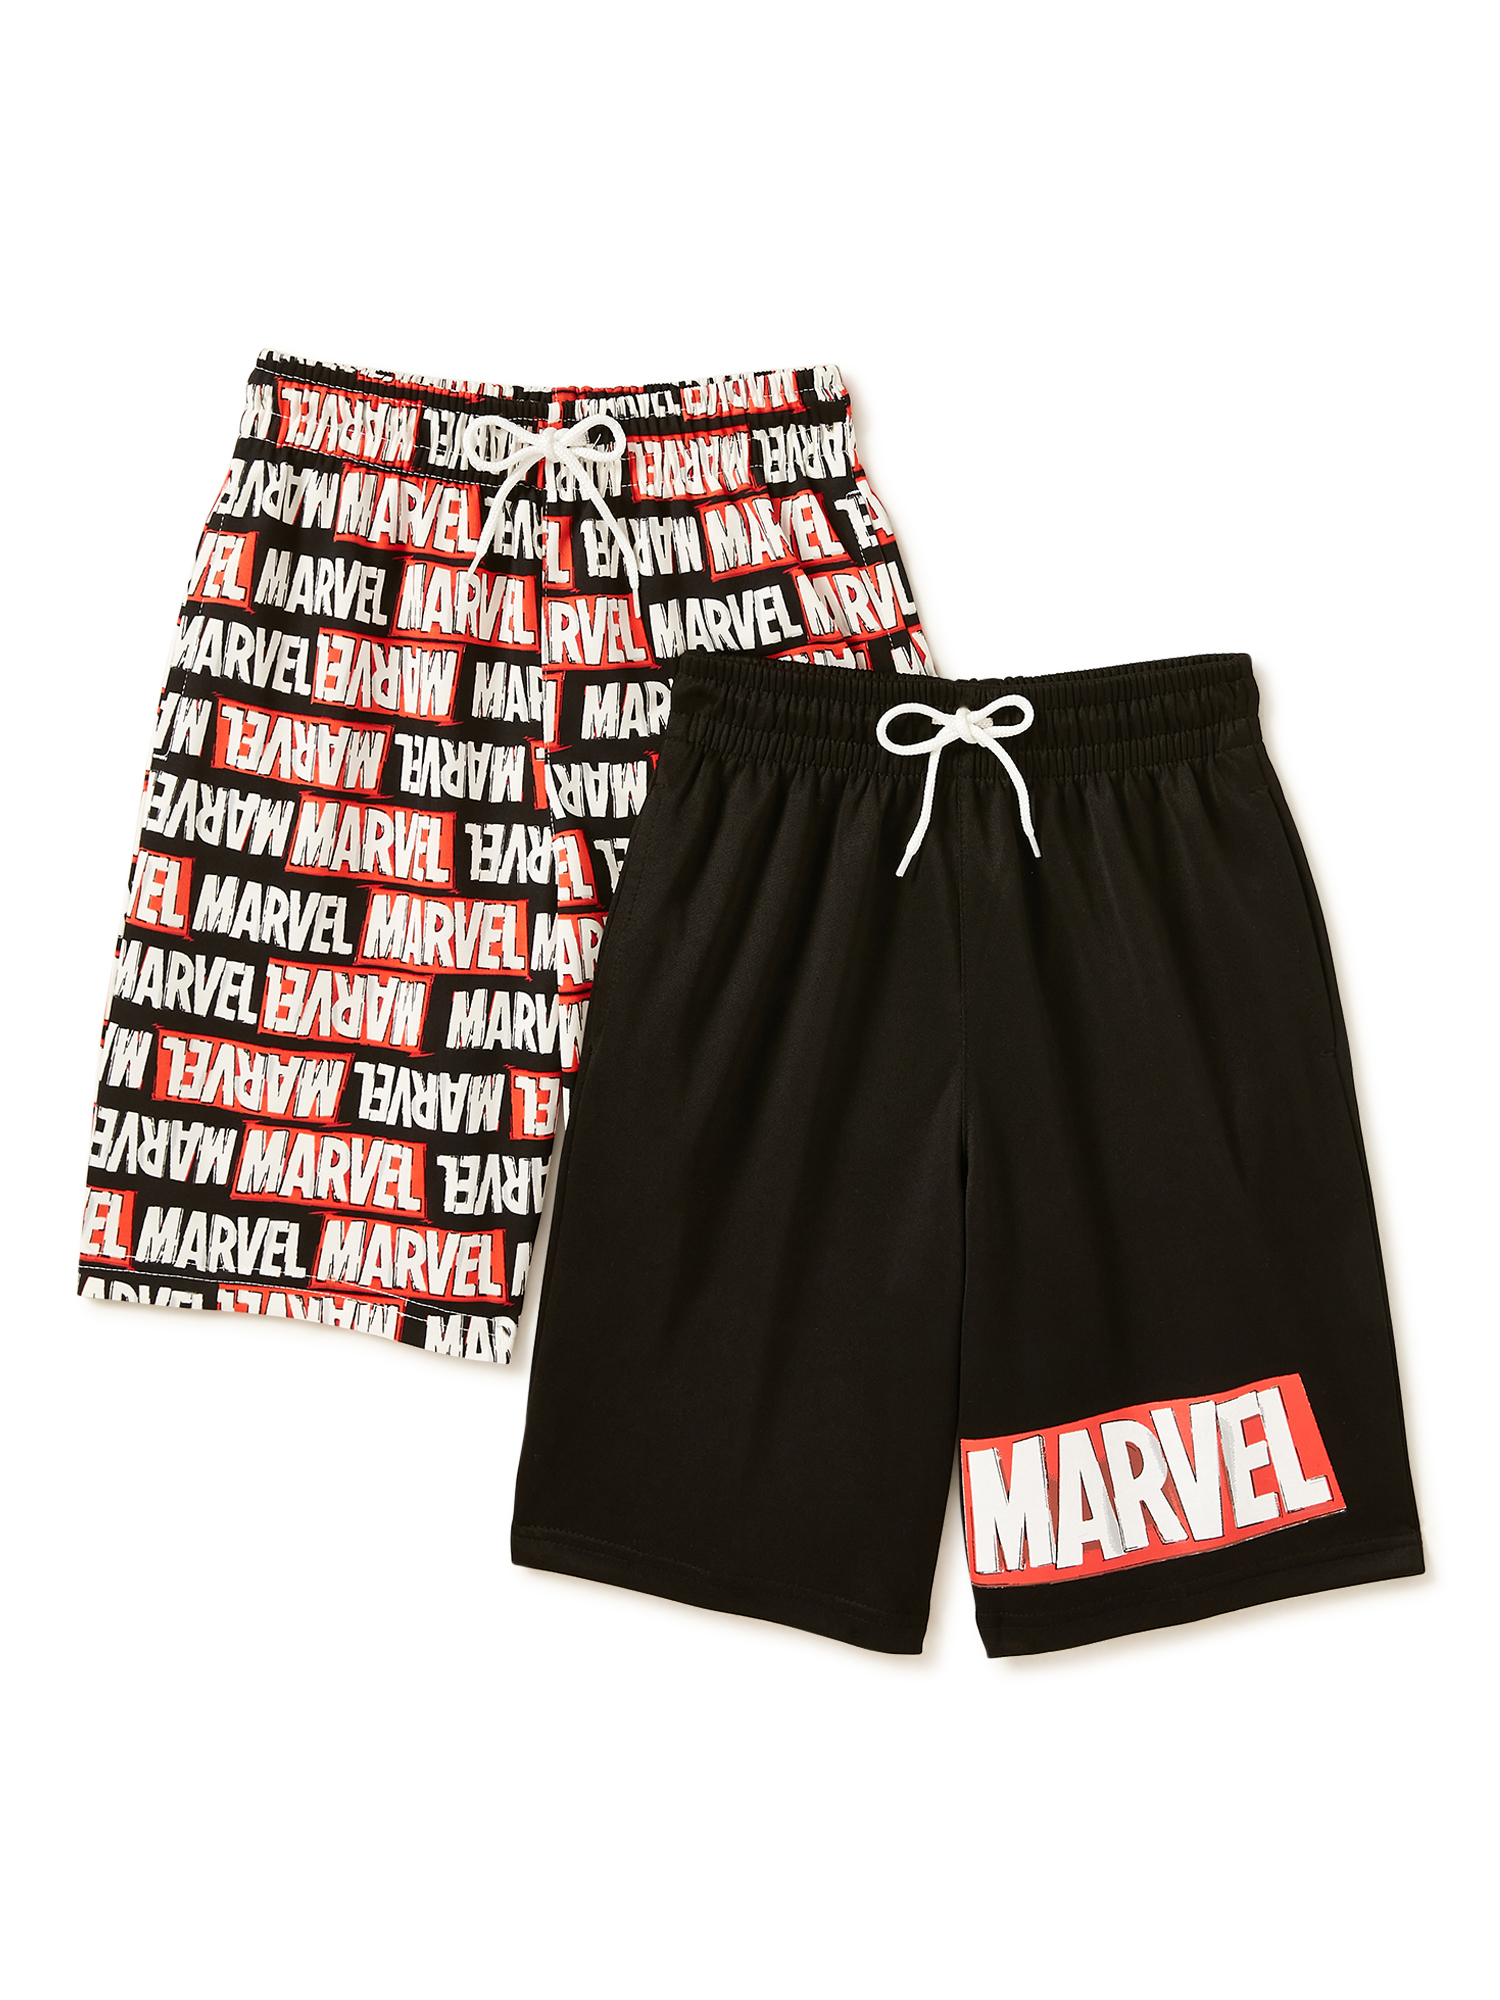 Marvel Comics Boys Active Shorts, 2-Pack, Sizes 4-14 - image 1 of 3